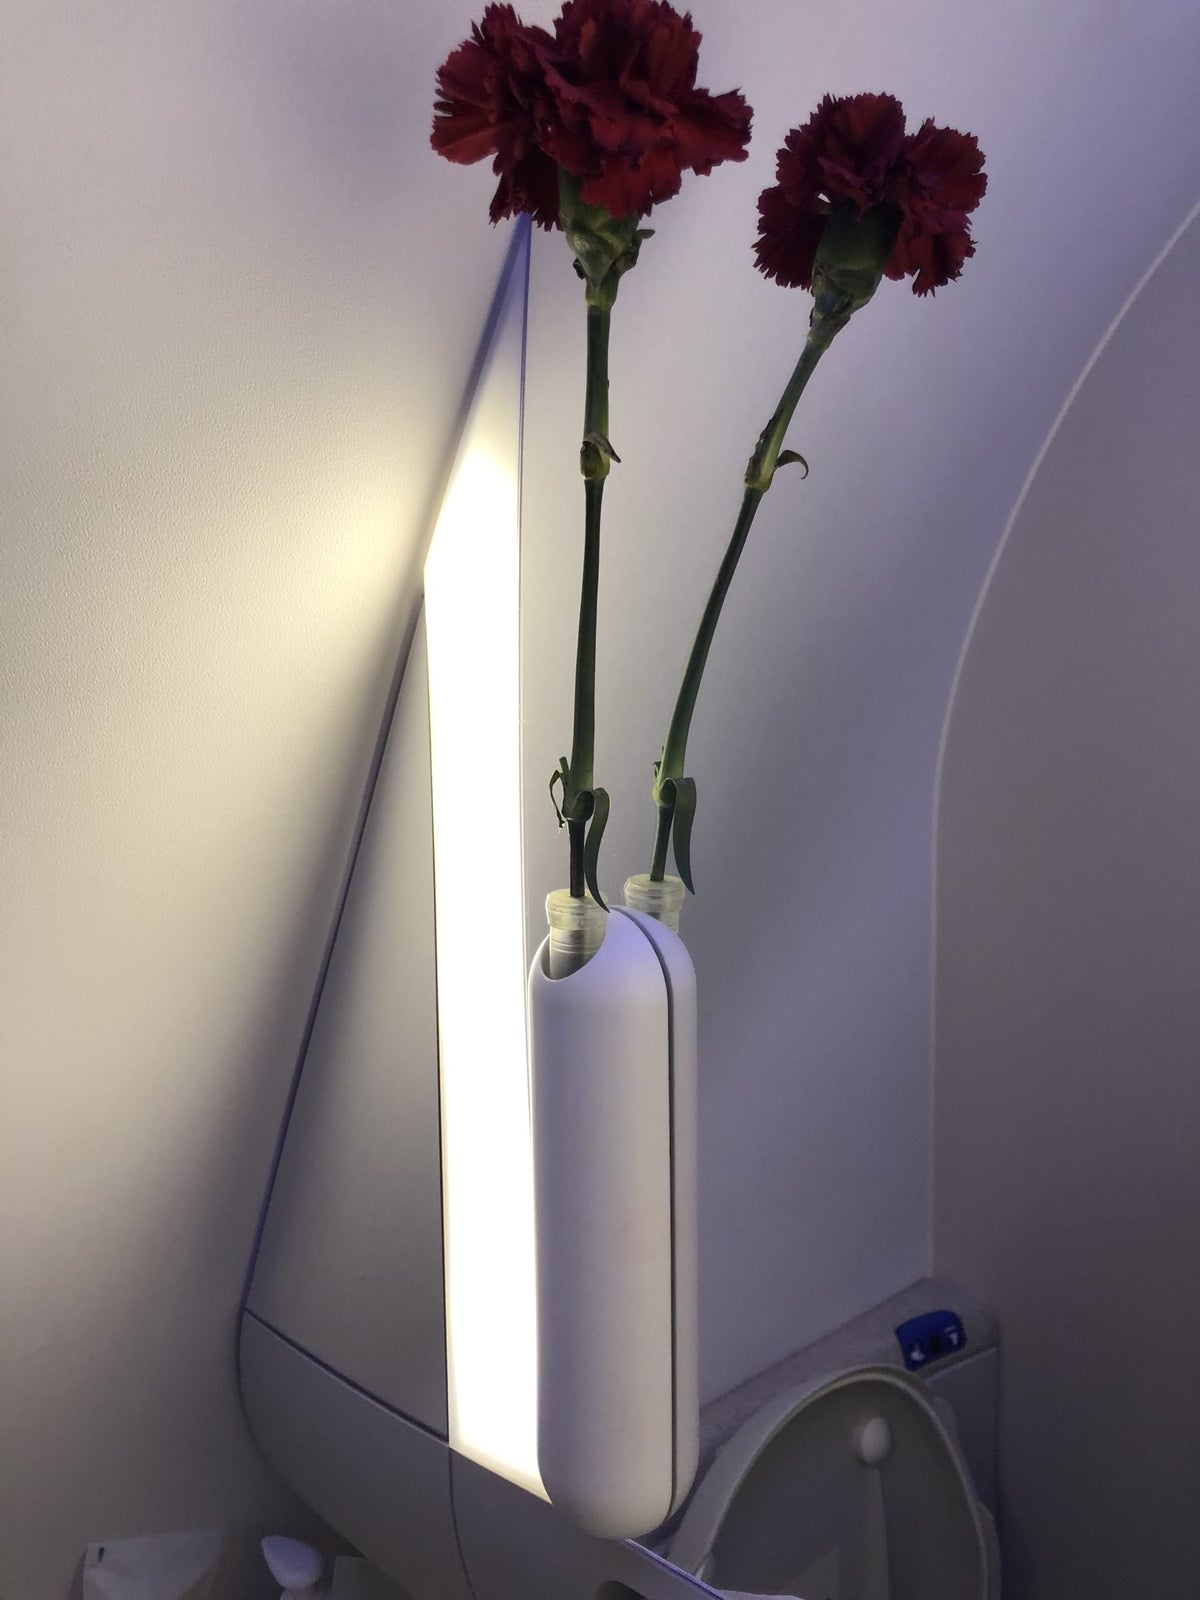 Vietnam Airlines 787-9 business class lavatory flowers